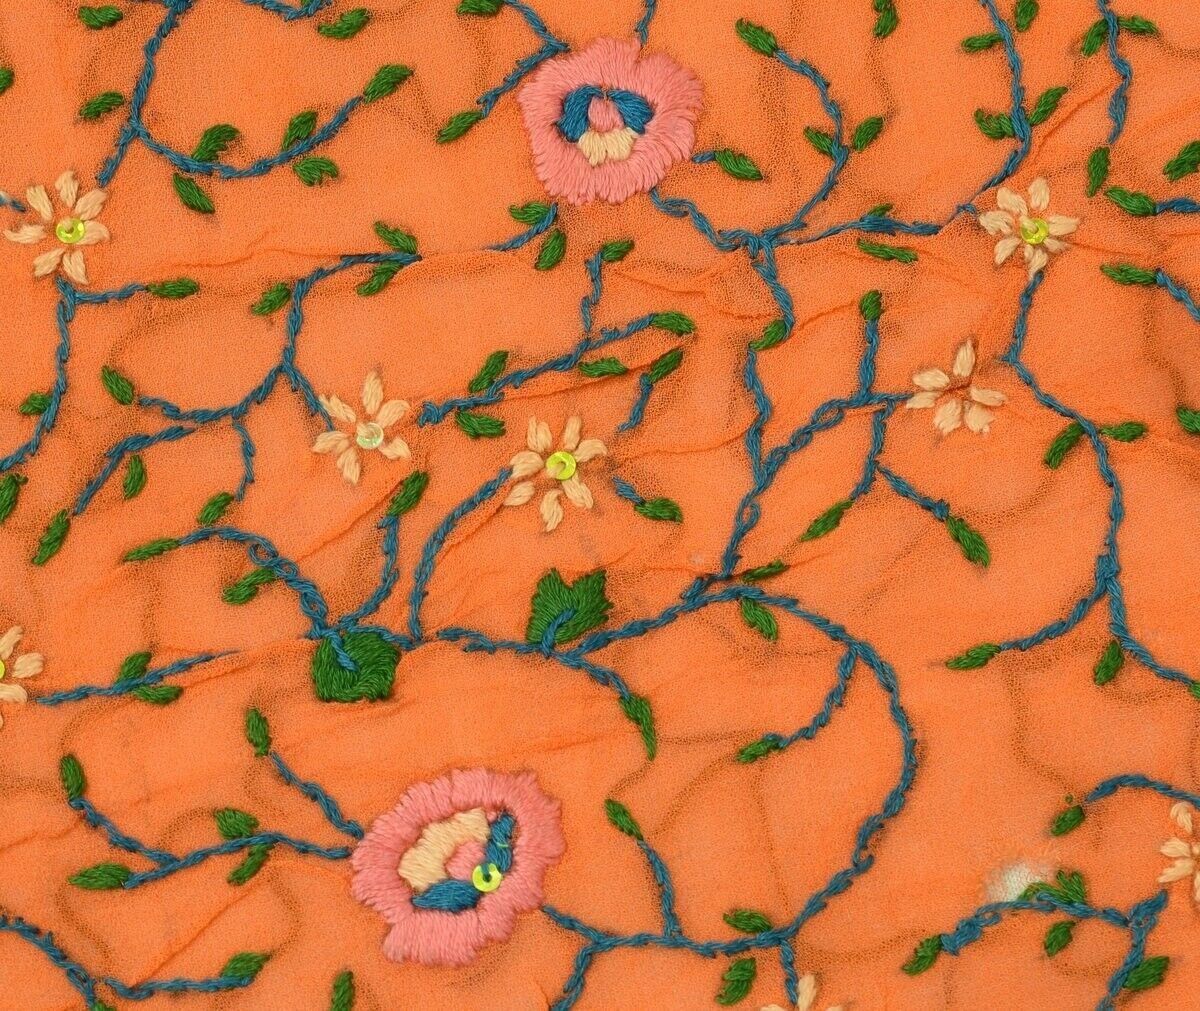 Vintage Saree Multi Purpose Fabric Piece for Sew Craft Hand Embroidered Orange